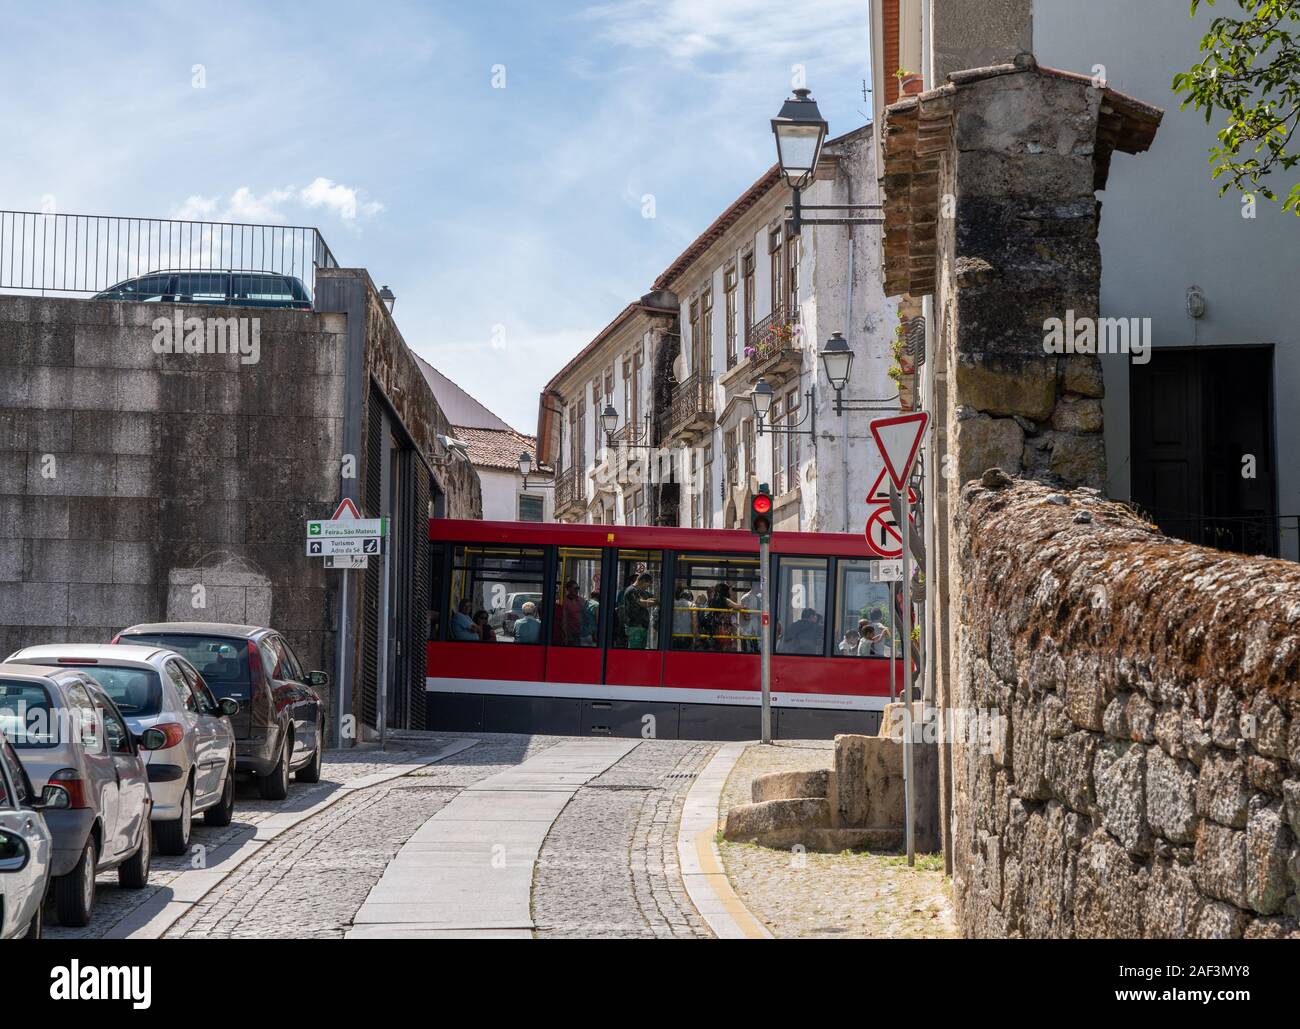 Viseu, Portugal - 19 August 2019: rote Straßenbahn oder standseilbahn Kreuze in die Altstadt station Stockfoto